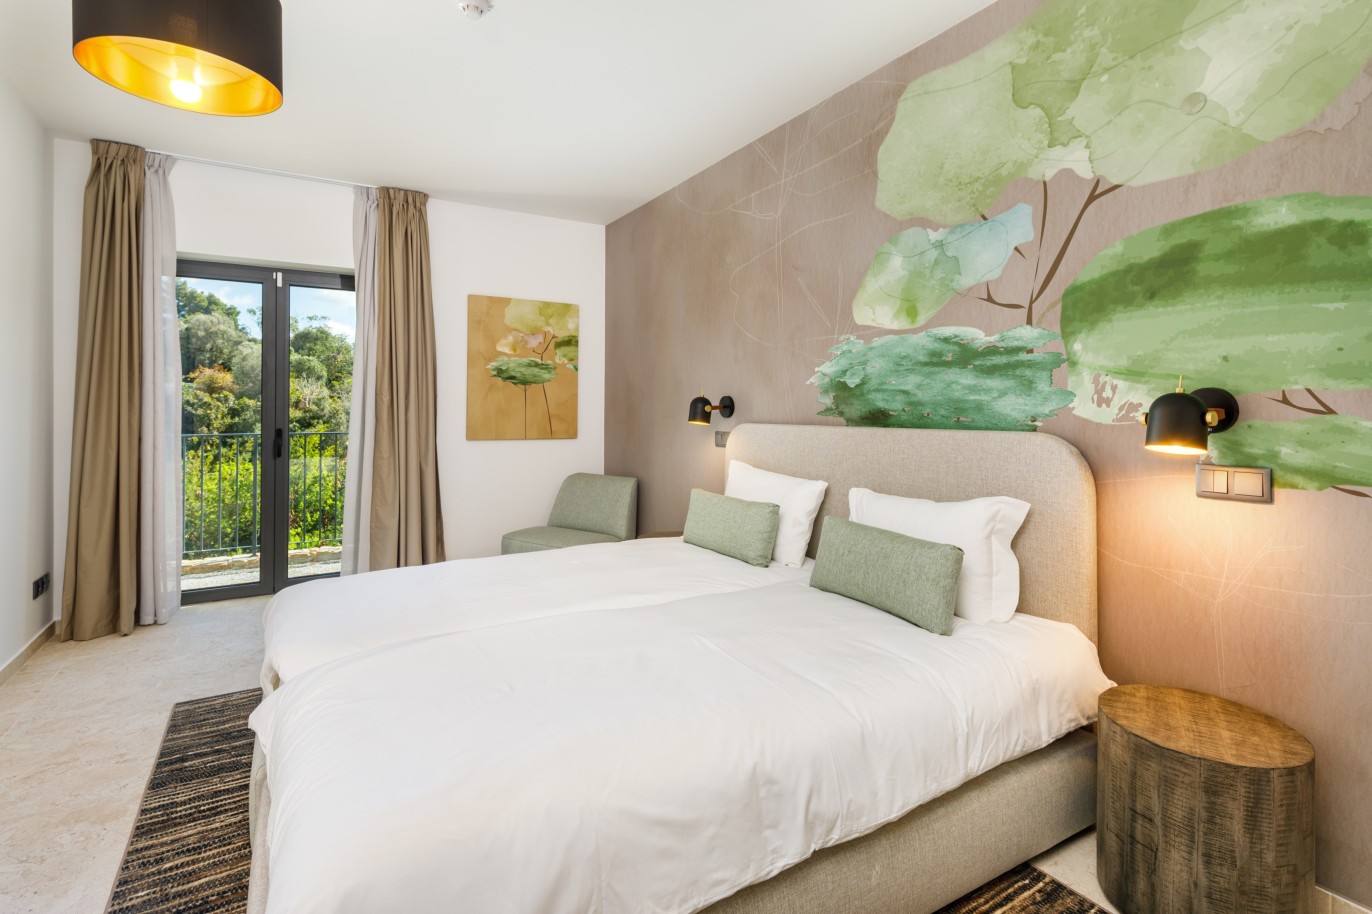 5 Bedroom Villa in luxury condominium with private pool, Carvoeiro, Algarve_259457